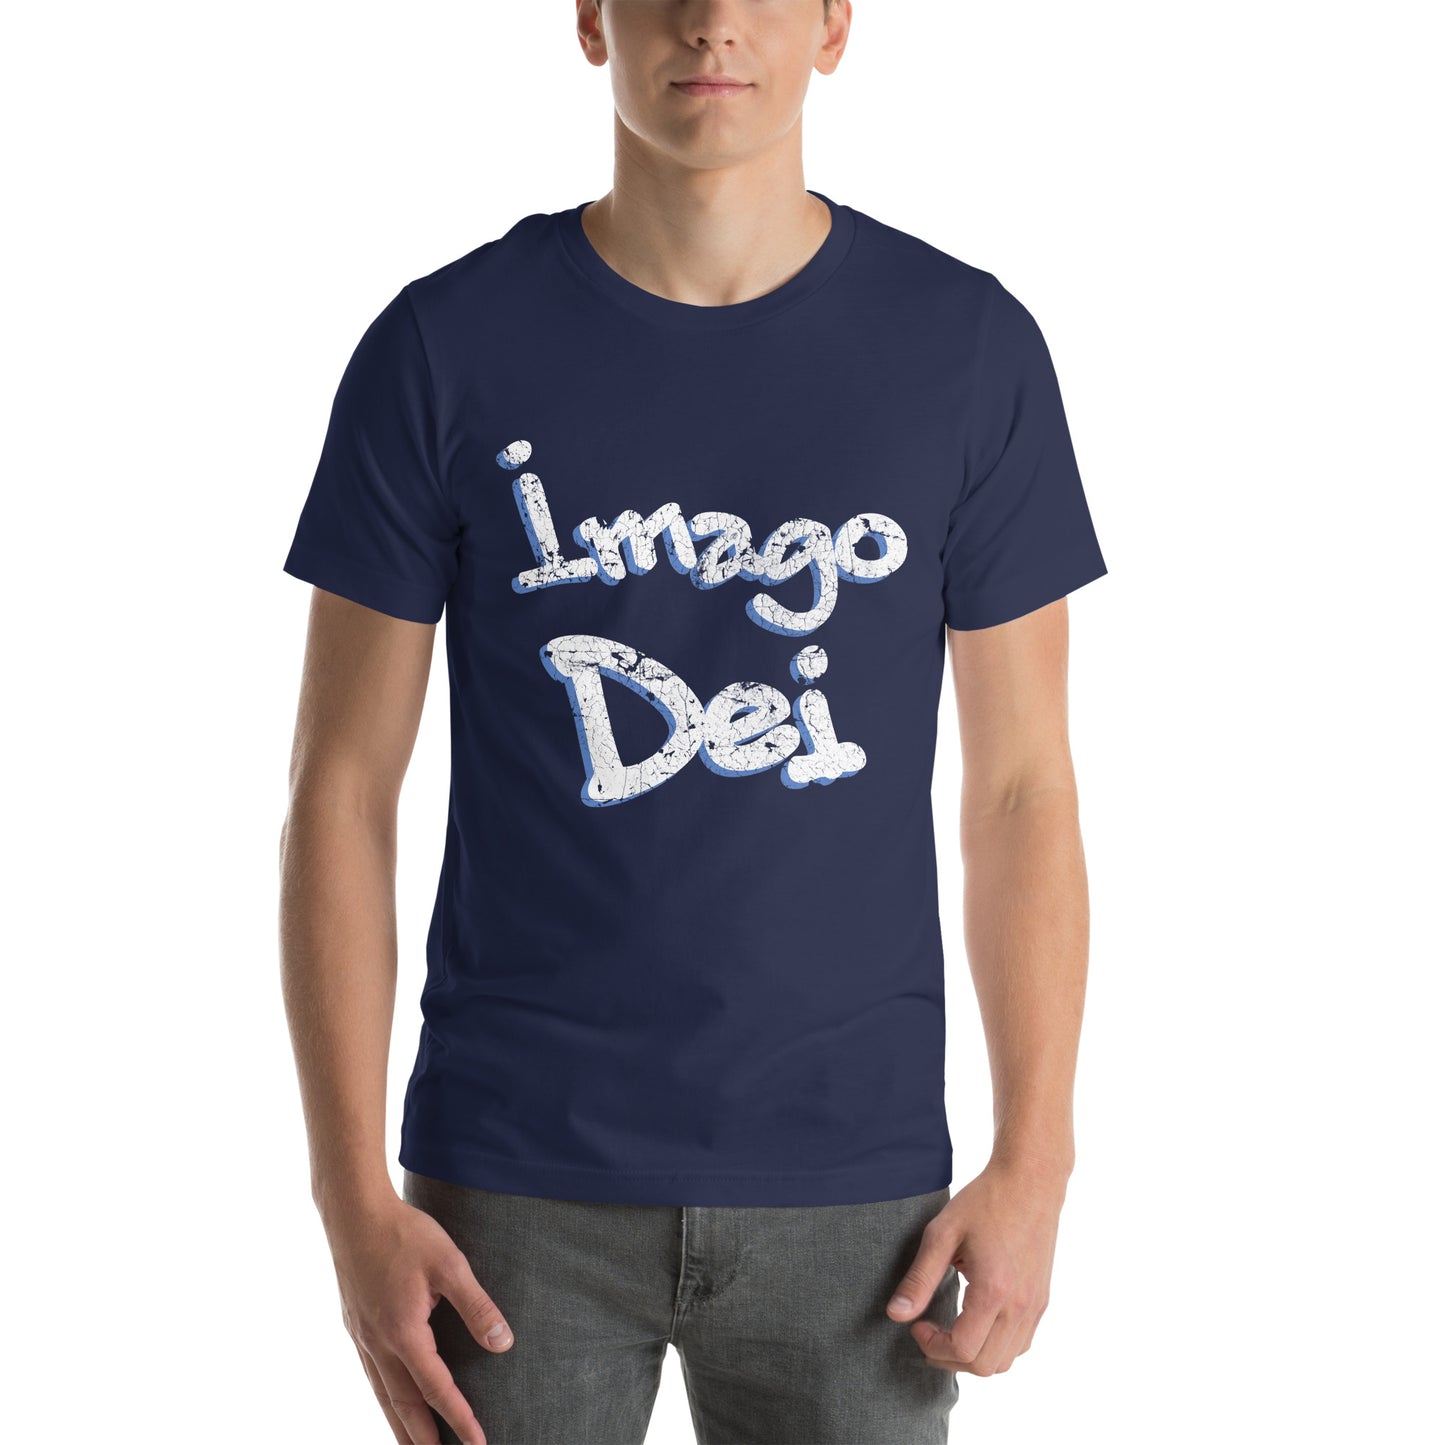 Imago Dei Grunge Graffiti Unisex t-shirt - Solid Rock Designs | Christian Apparel